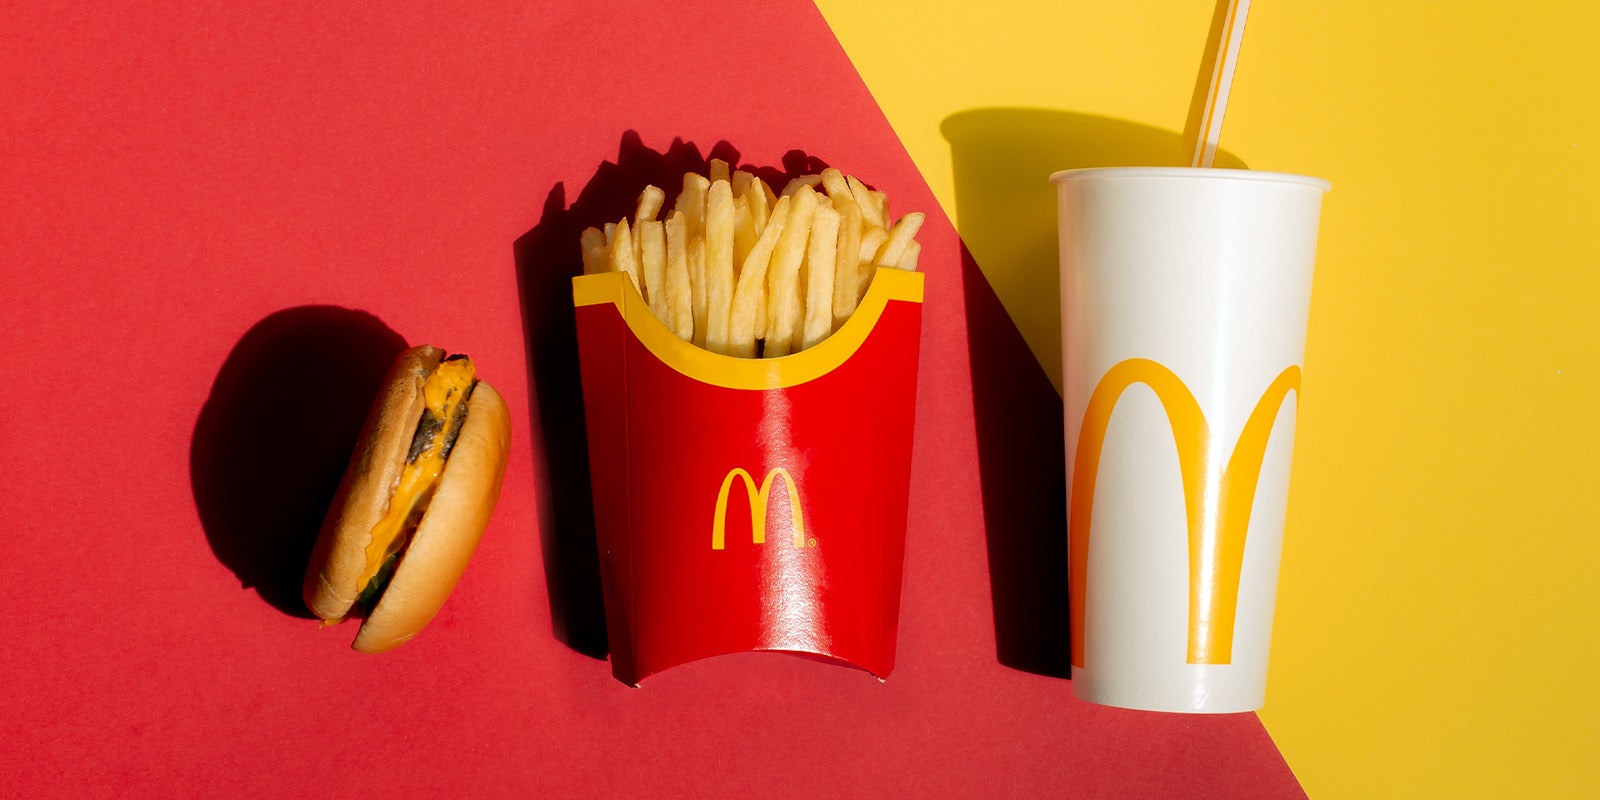 McDonald's Big Mac menu, French Fries, burger and dtink